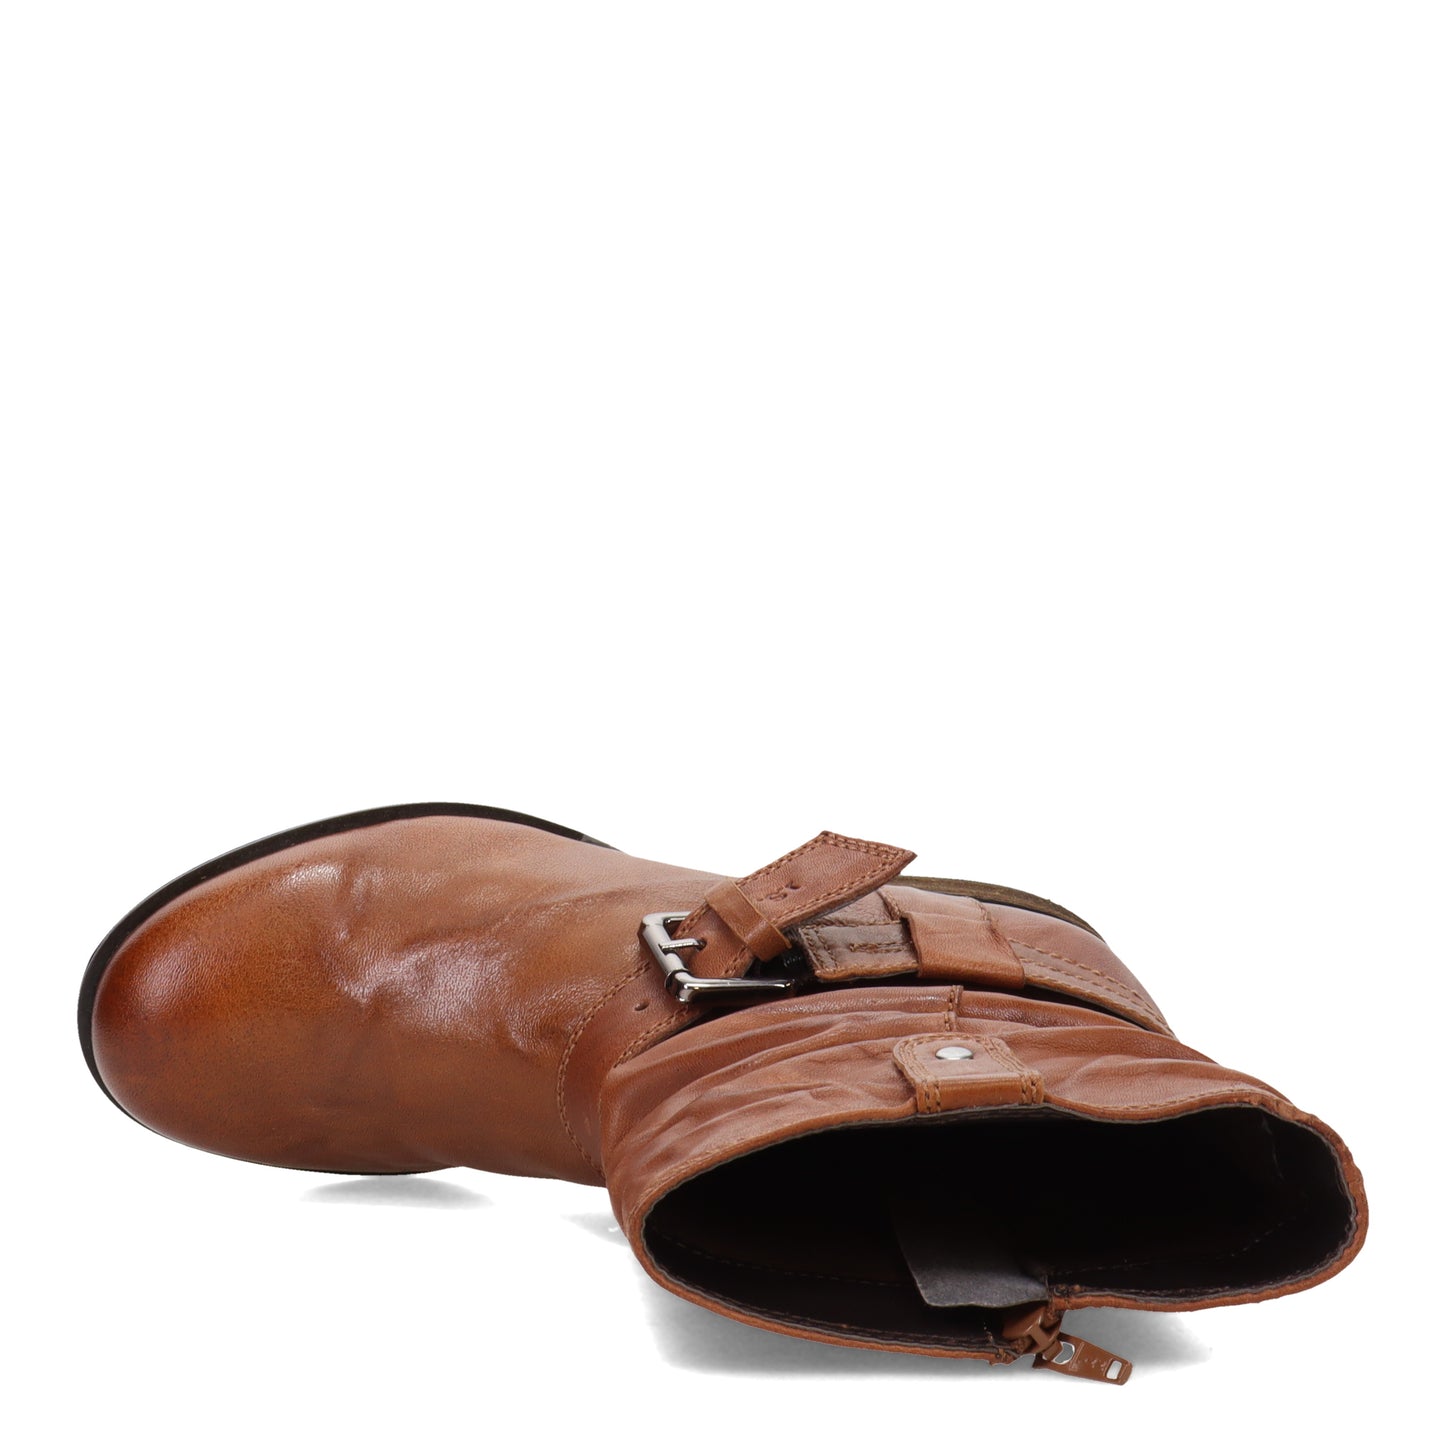 Peltz Shoes  Women's Josef Seibel Sanja 14 Boot COGNAC 76514-160370